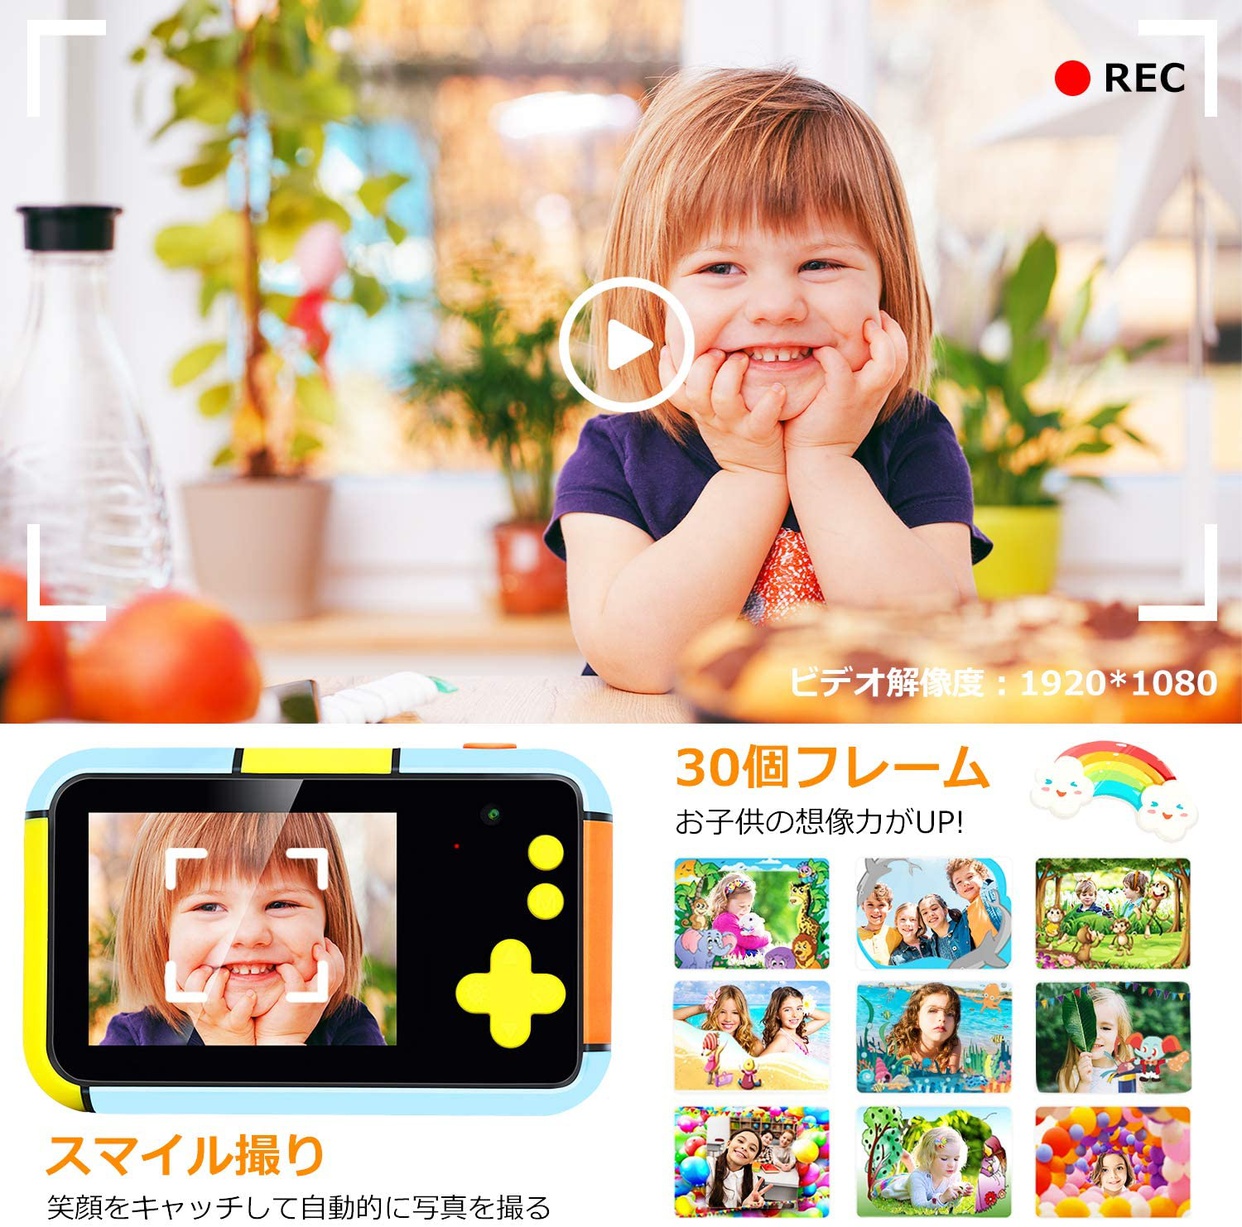 WisFox(ウィスフォックス) 子供用デジタルカメラの商品画像6 